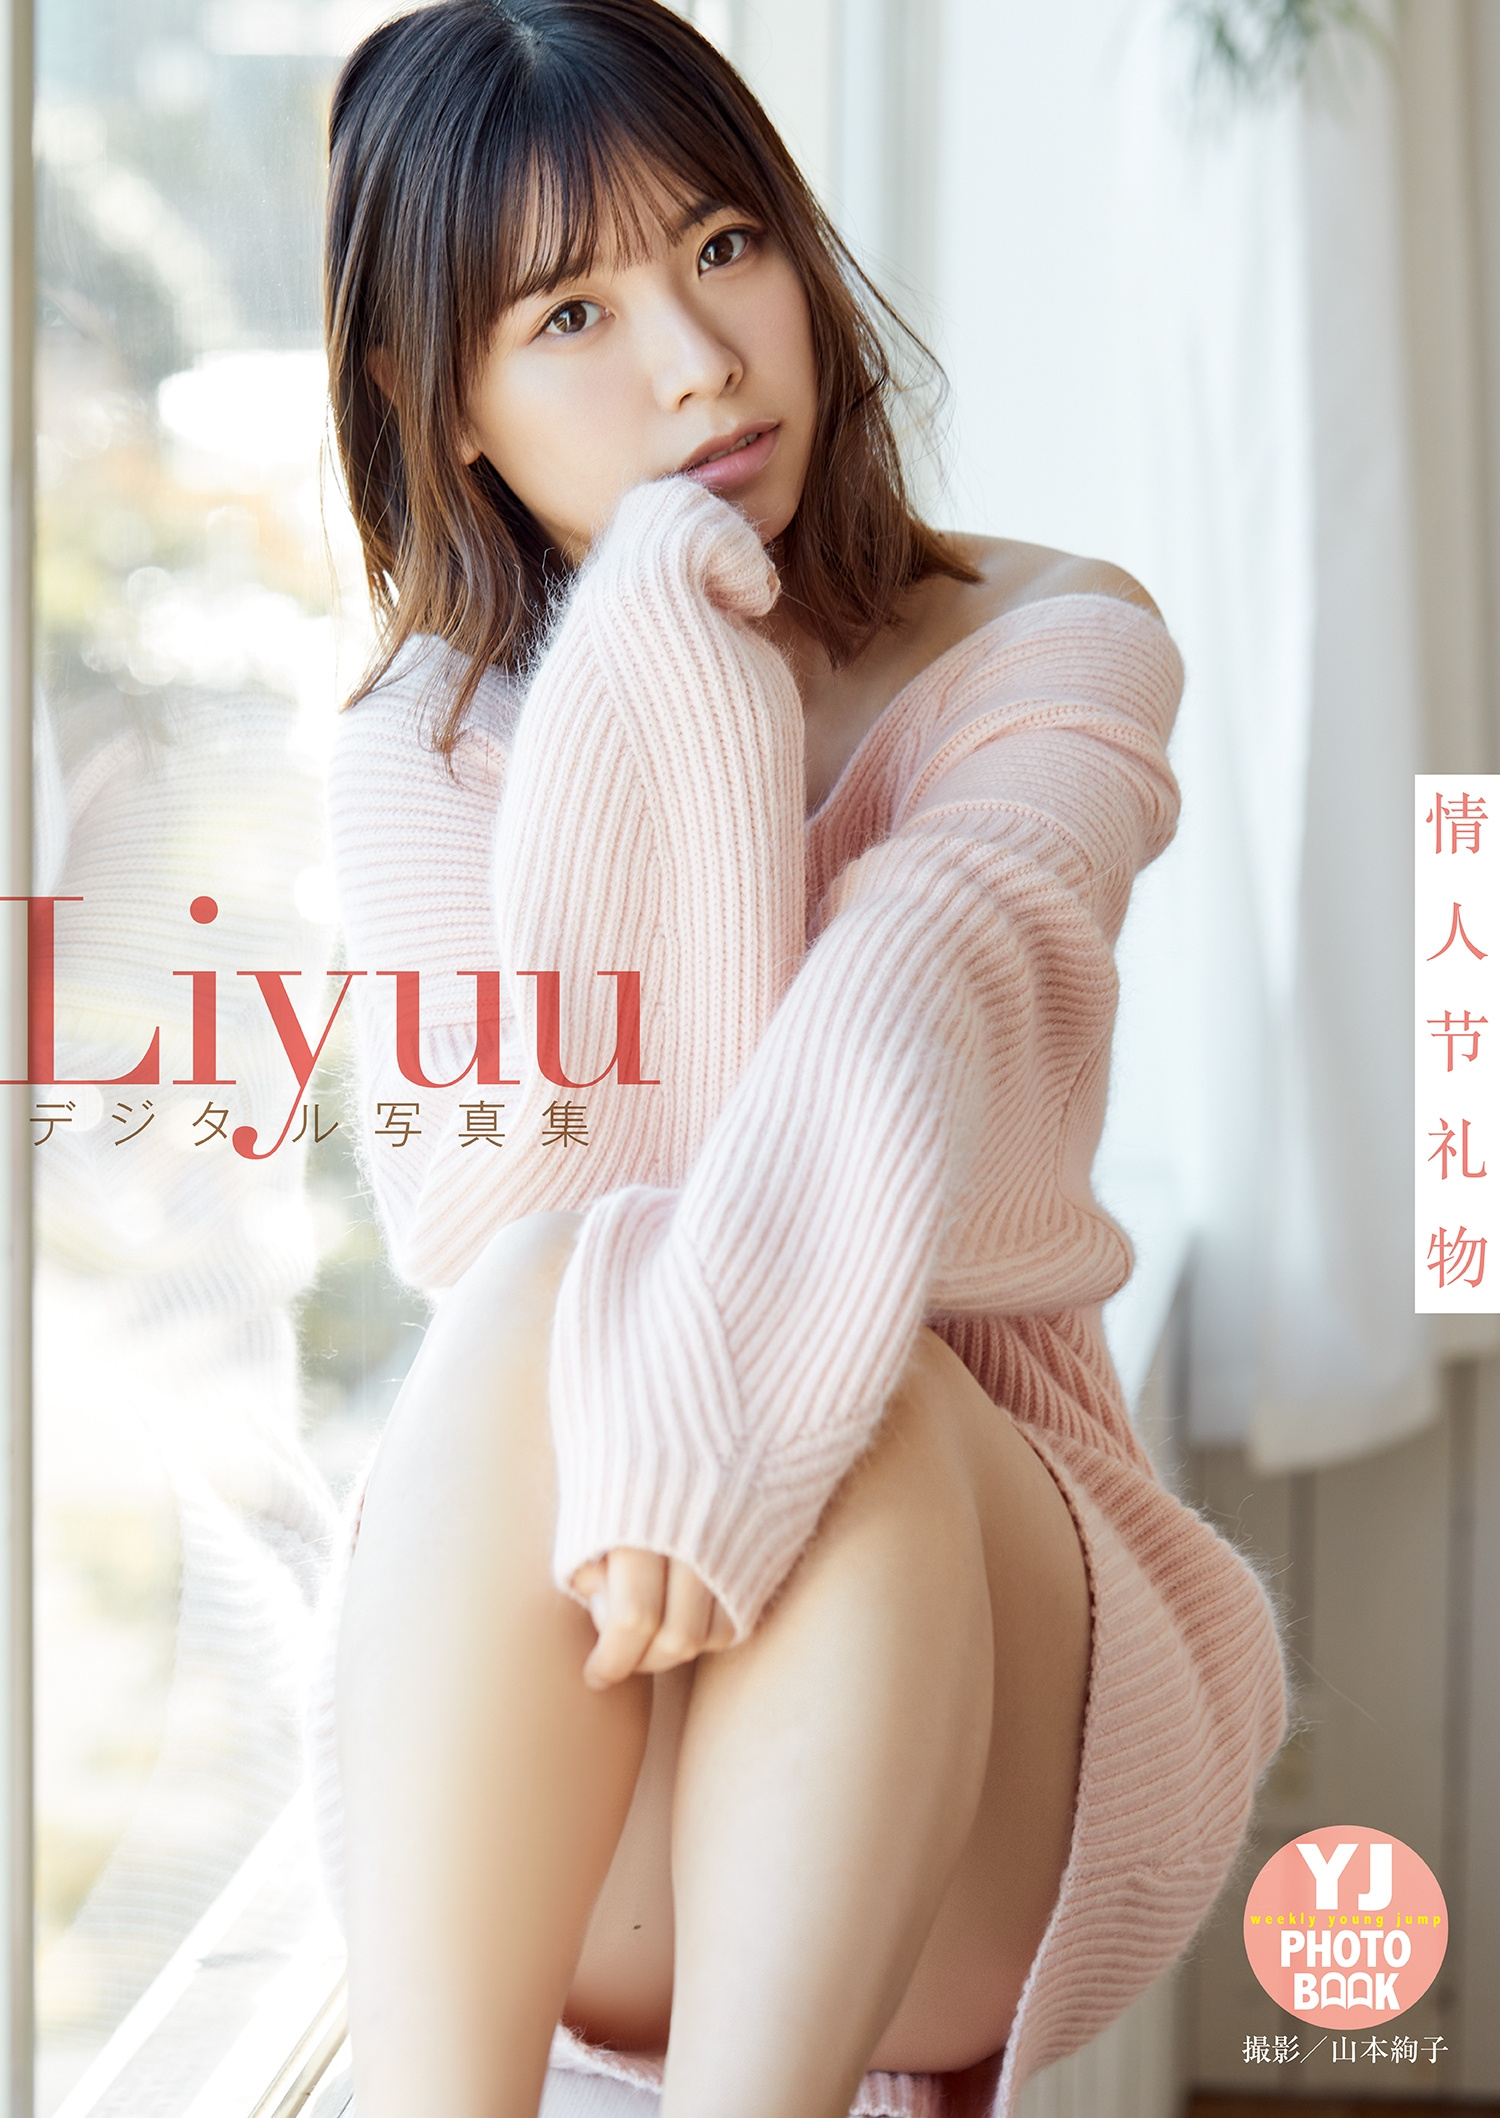 Liyuu 【デジタル限定 YJ PHOTO BOOK】情人节礼物 Part 1 ​​​ - itotii